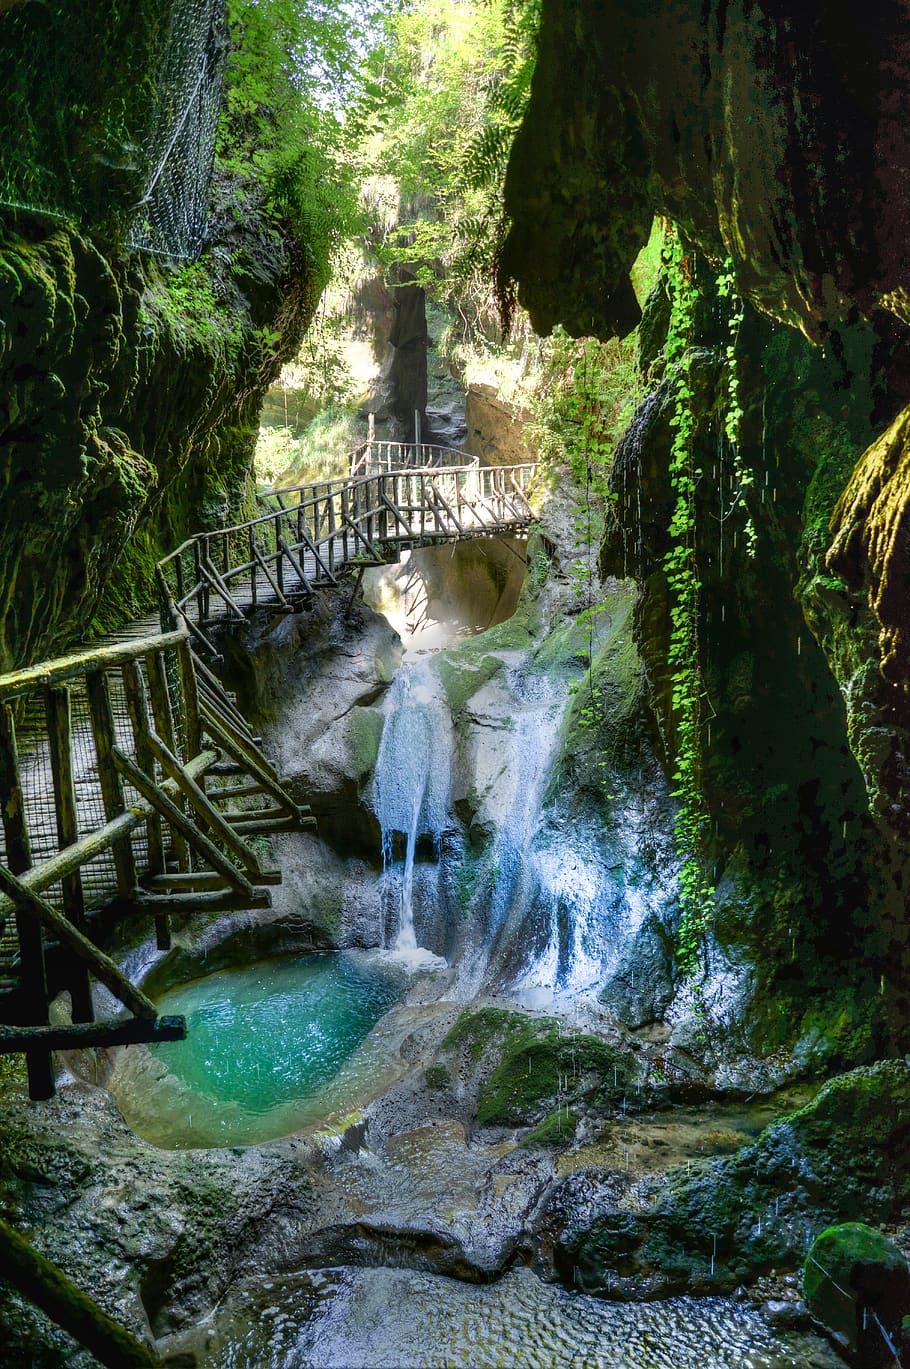 229 Waterfall Wallpaper Hd Images, Stock Photos & Vectors | Shutterstock